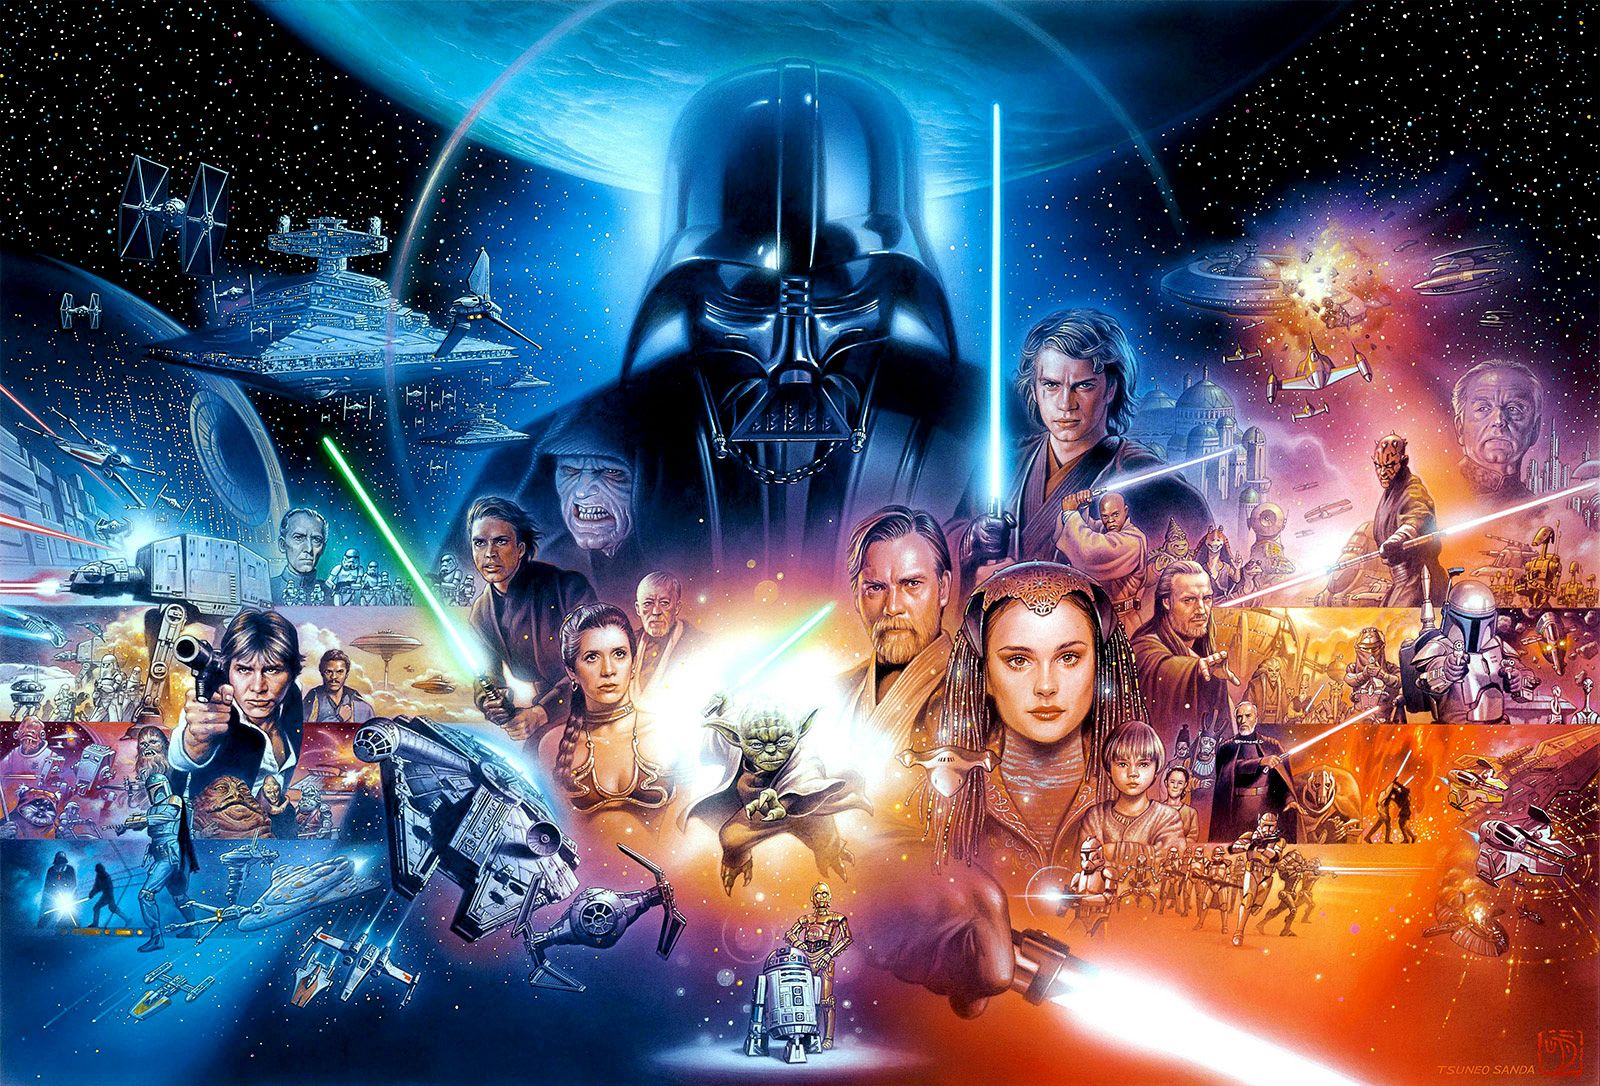 Poster stars. Звездные войны: трилогия, эпизоды 1-3. Звёздные войны Стар ВАРС. Вся сага Звездные войны. Звездные войны Постер.